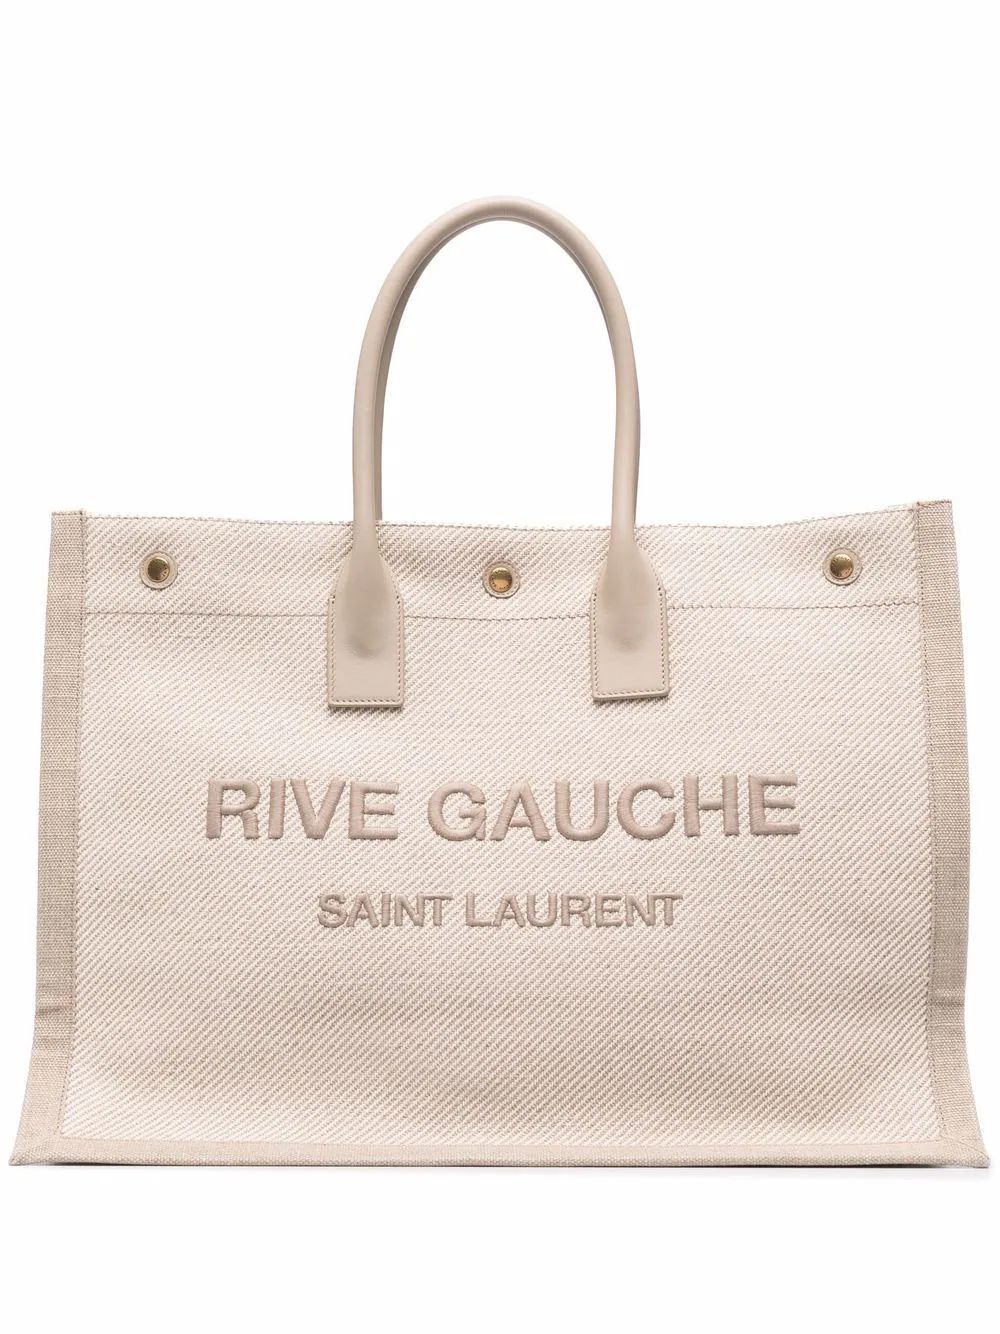 Saint Laurent Rive Gauche Tote Bag - Farfetch | Farfetch Global